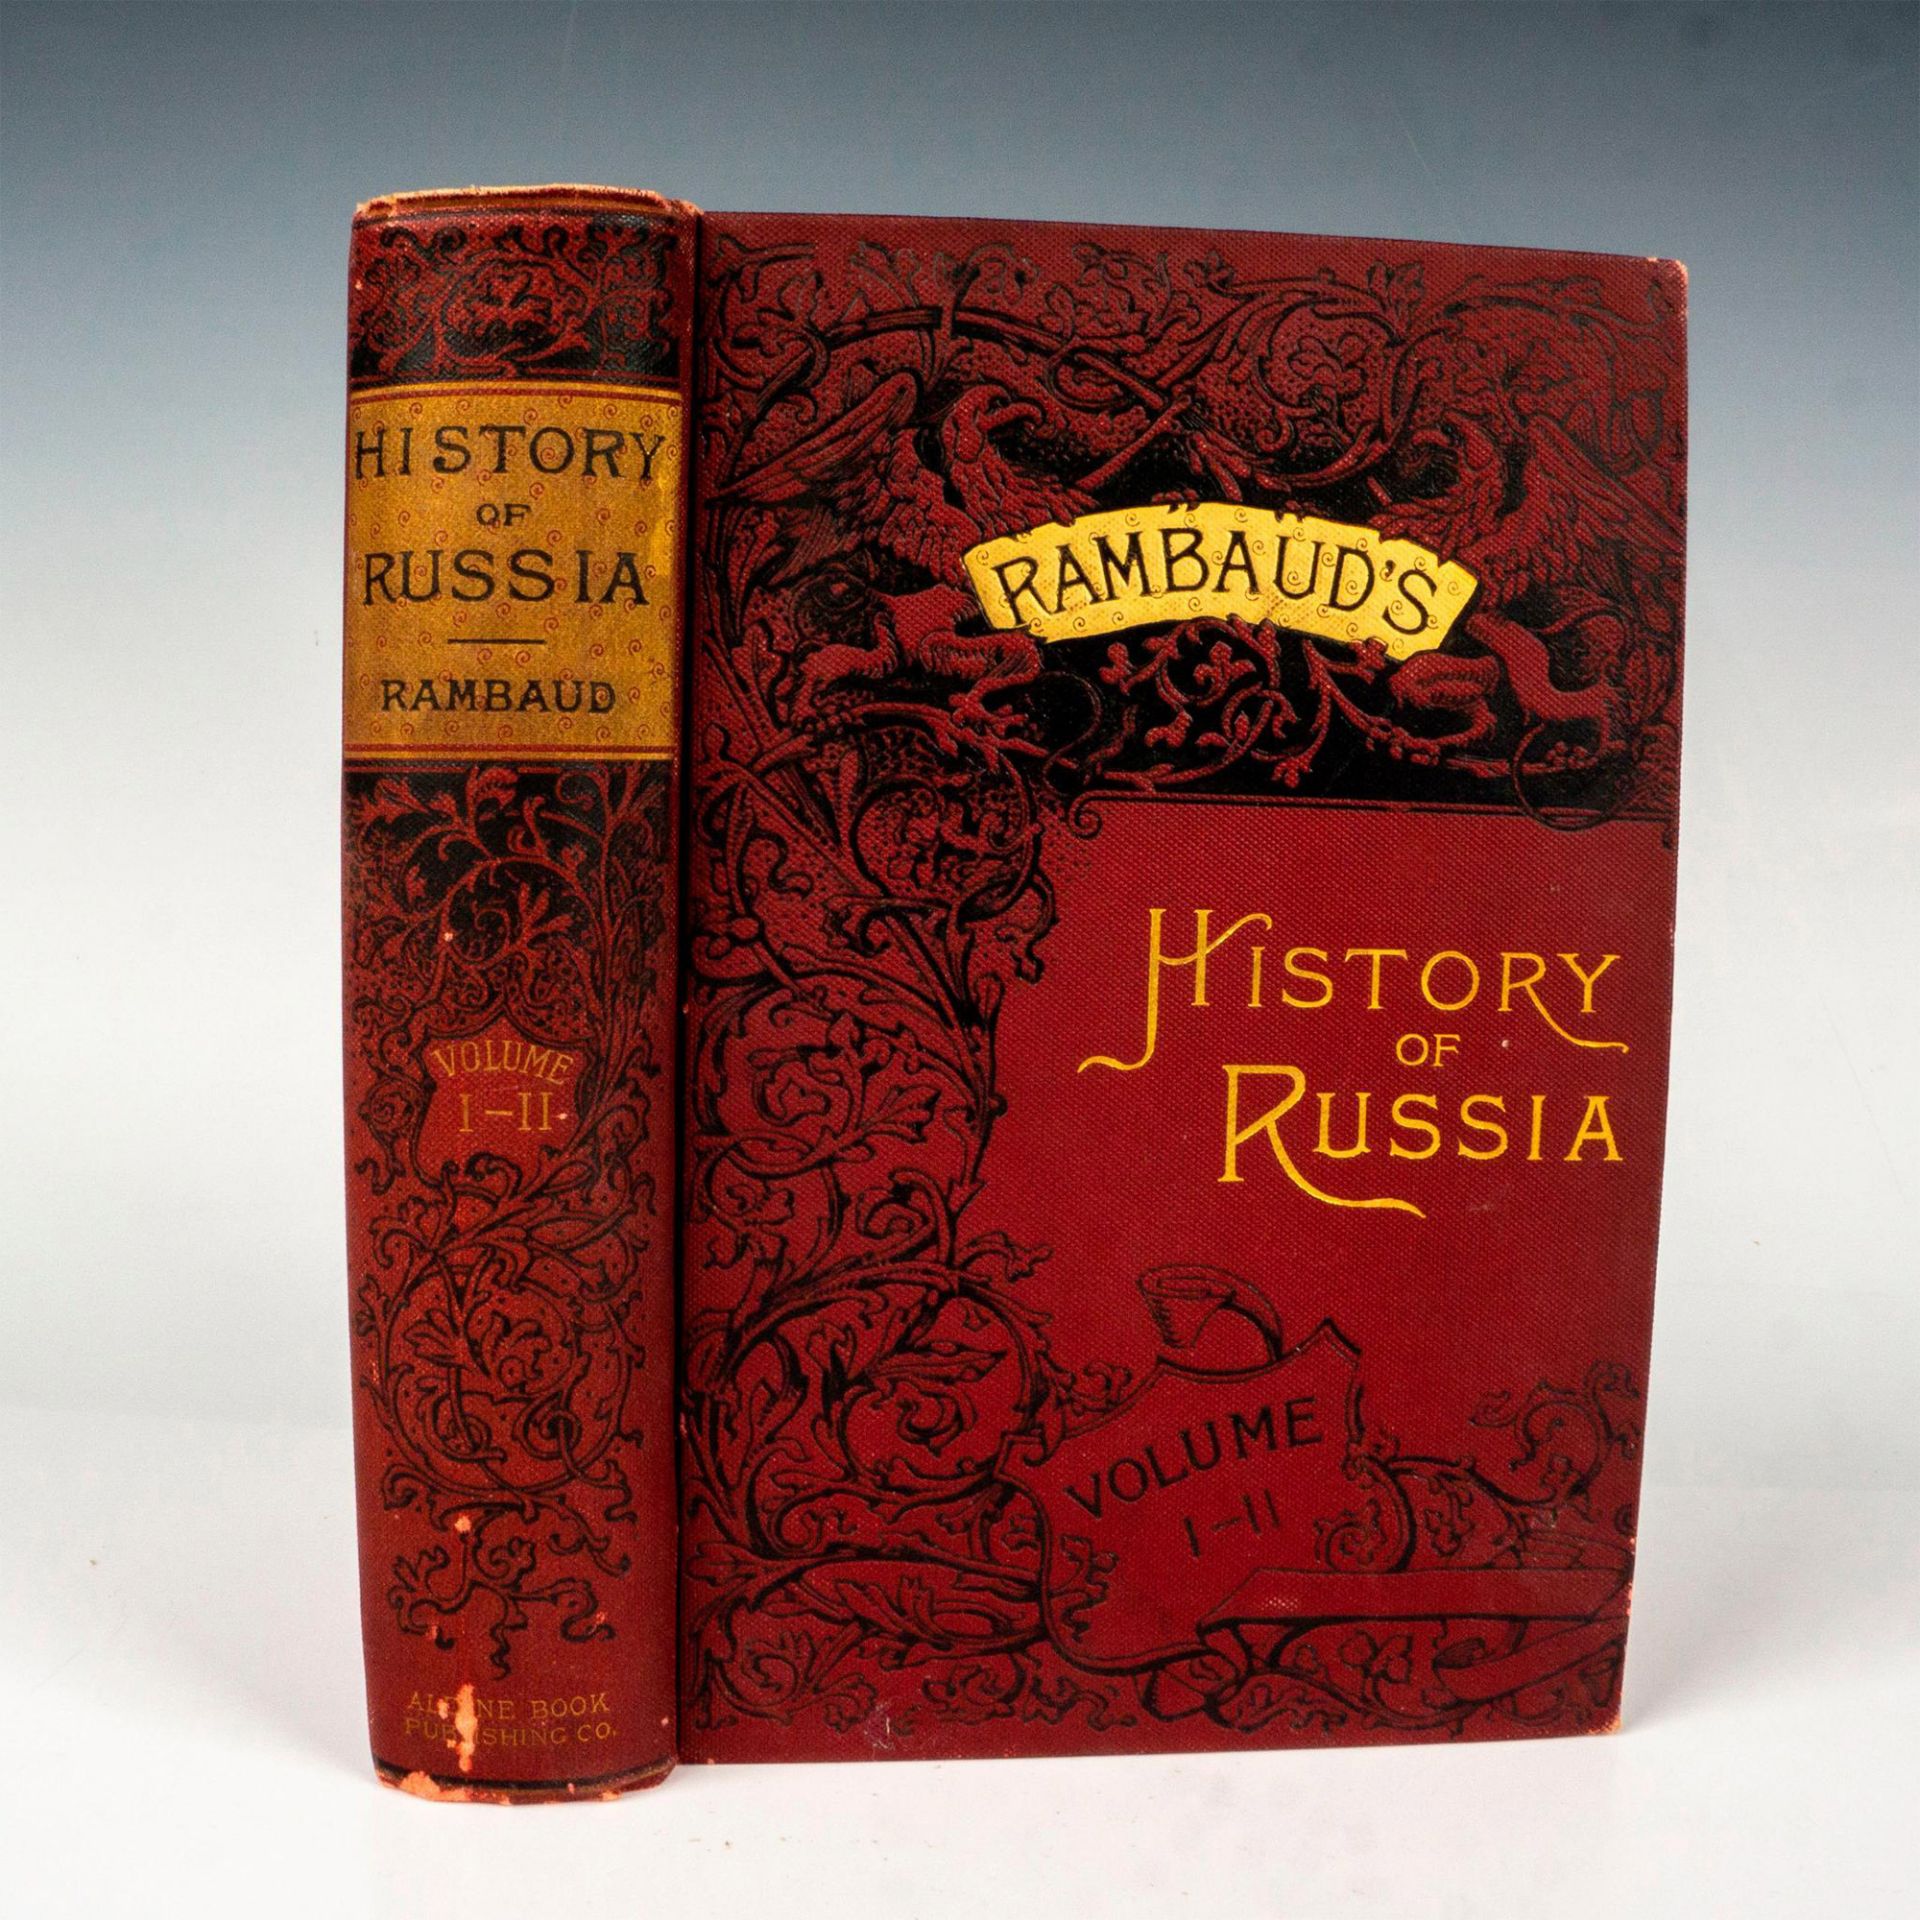 Rambaud's History of Russia Book, Volume 1-2